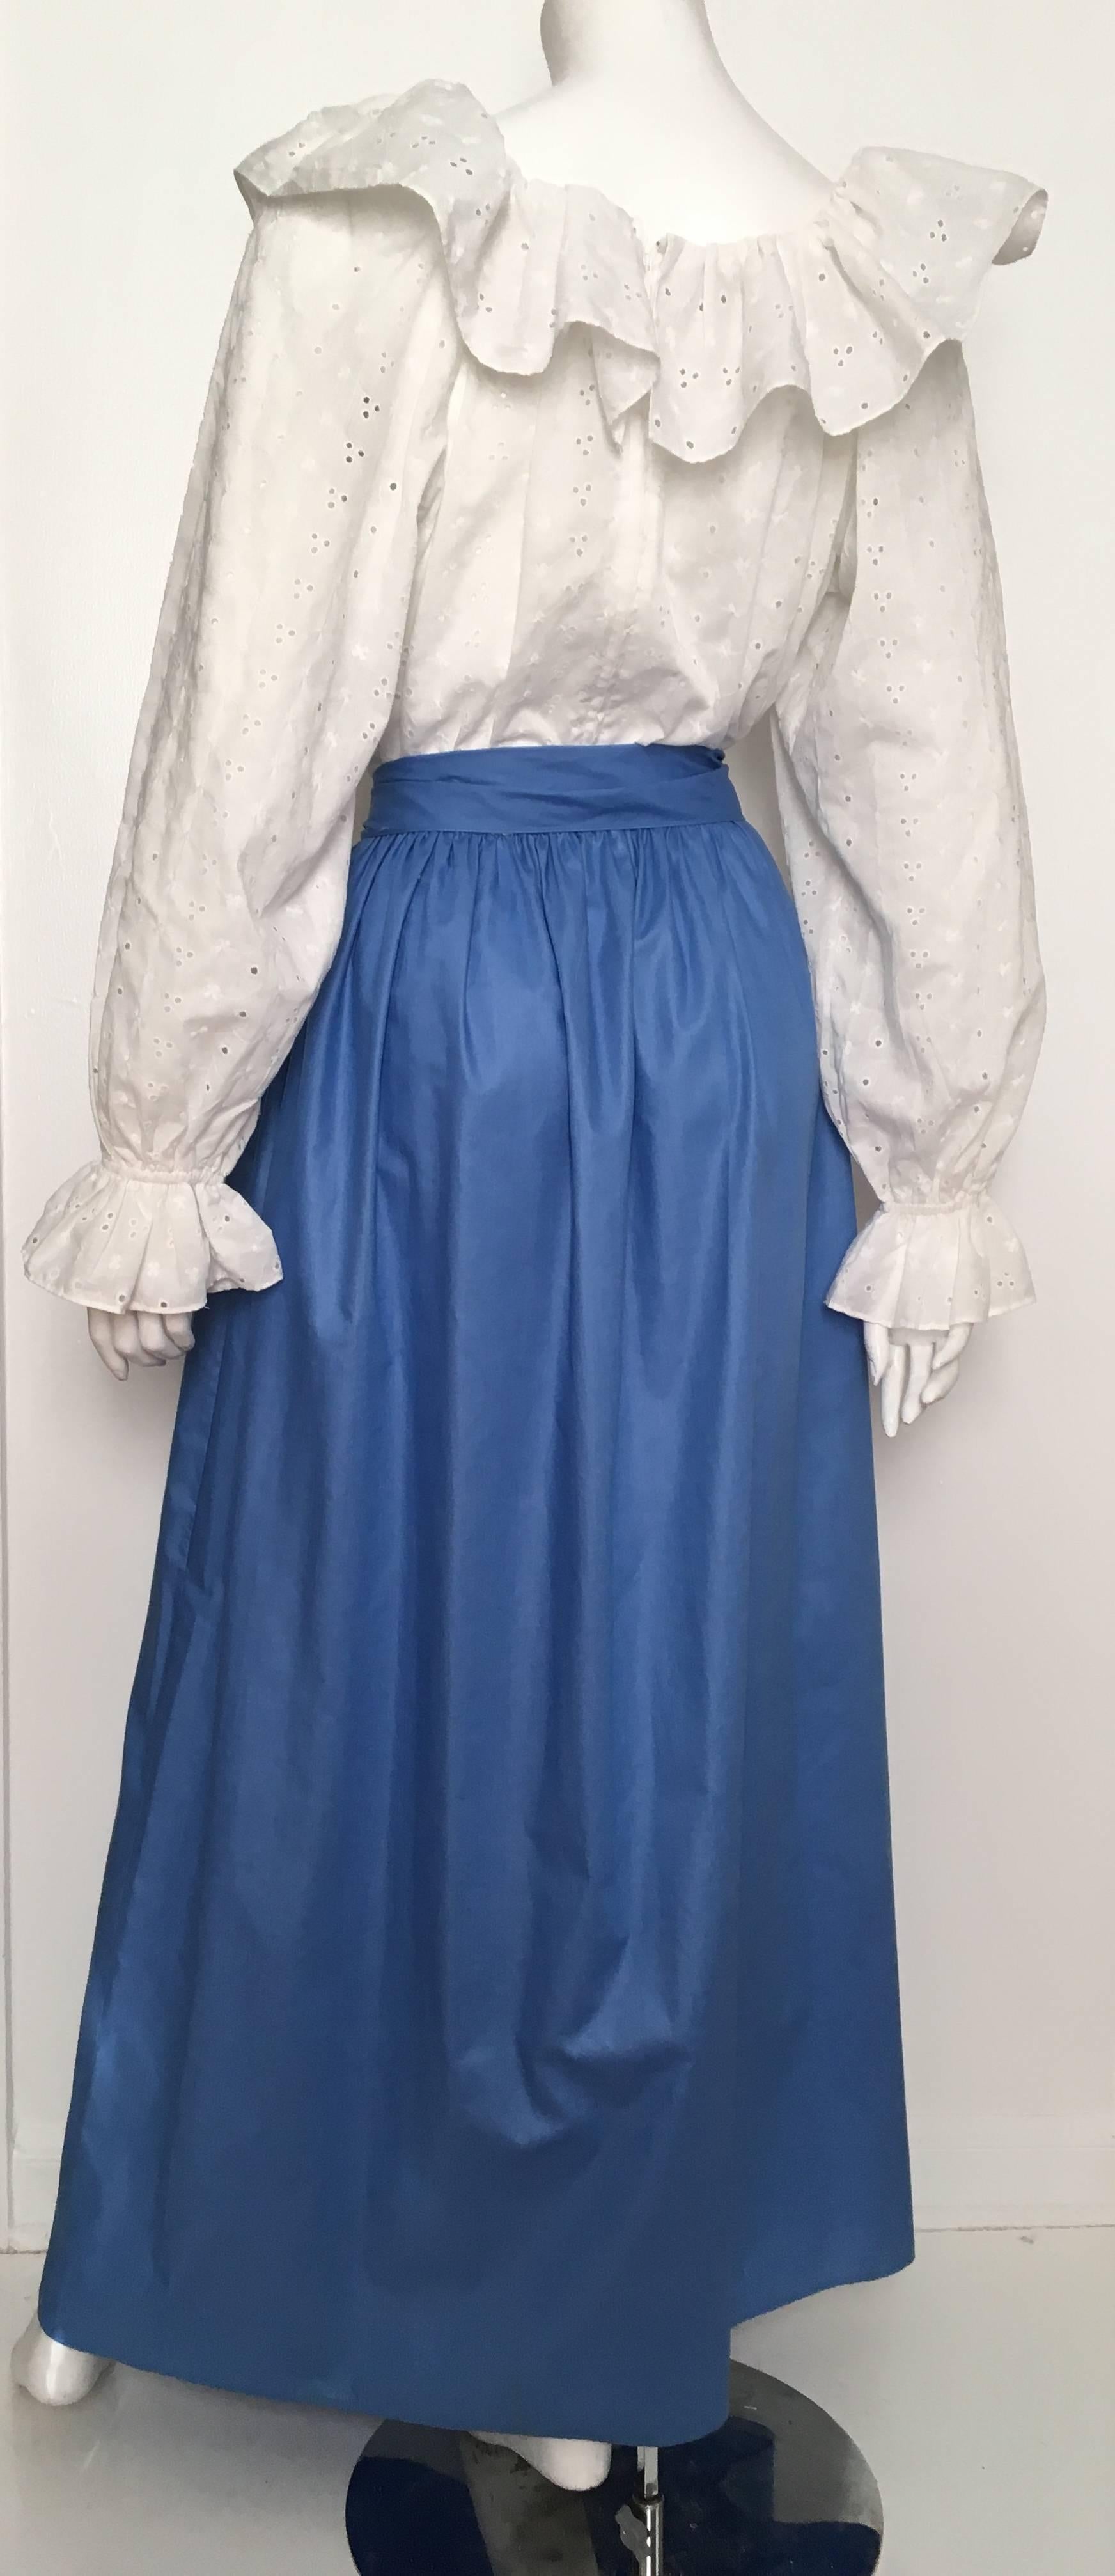 Women's or Men's Bill Blass 1980s Maxi Cotton Dress Size 8 / 10.